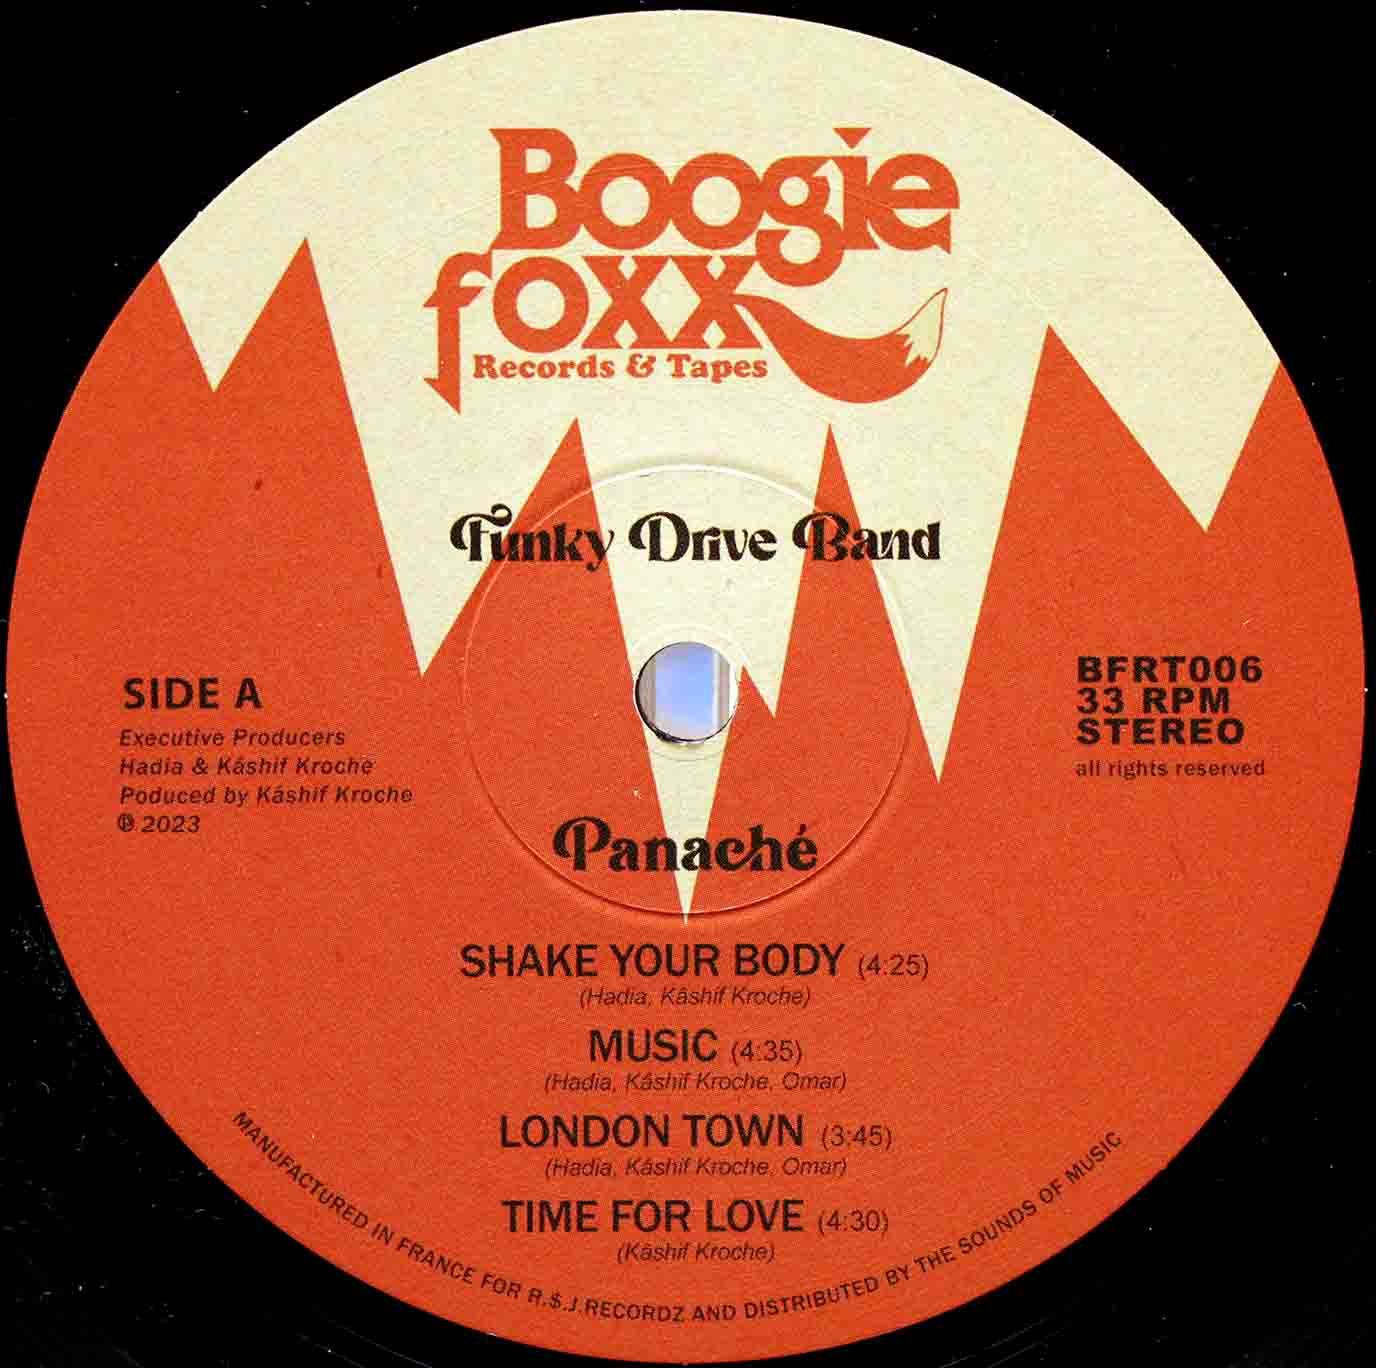 The Funky Drive Band (2023) Panaché 03